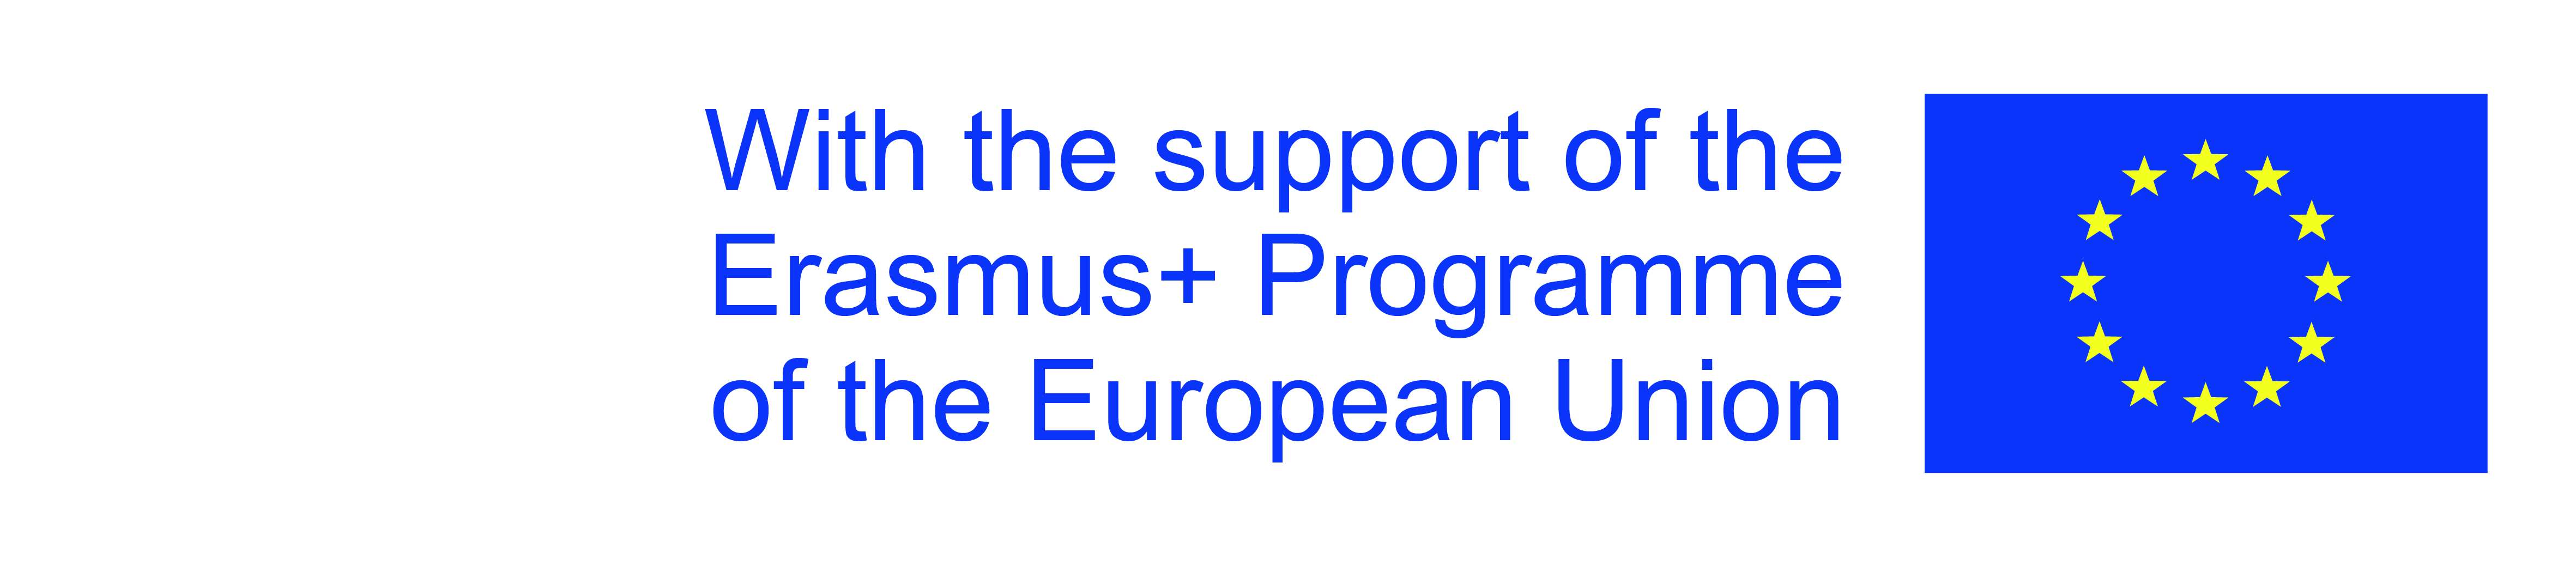 EU Logo - EN - Support - Left - JPG.jpg